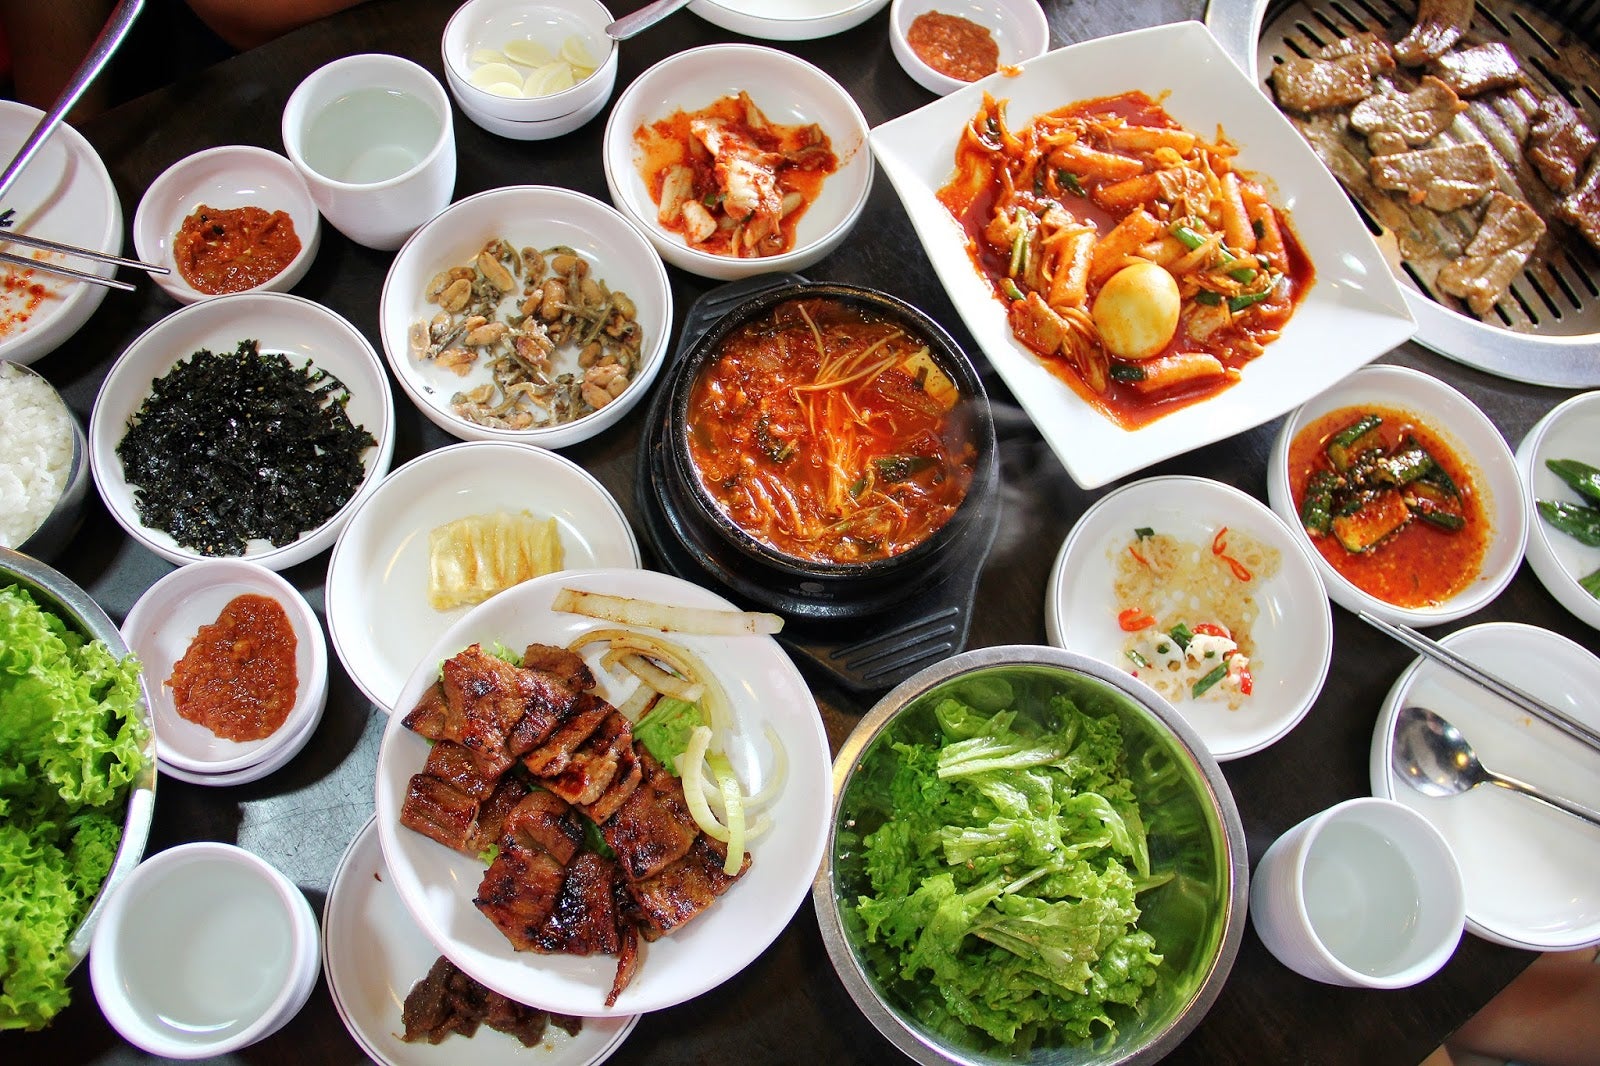 8 Most Authentic Korean Restaurants In Kl - World Of Buzz 2